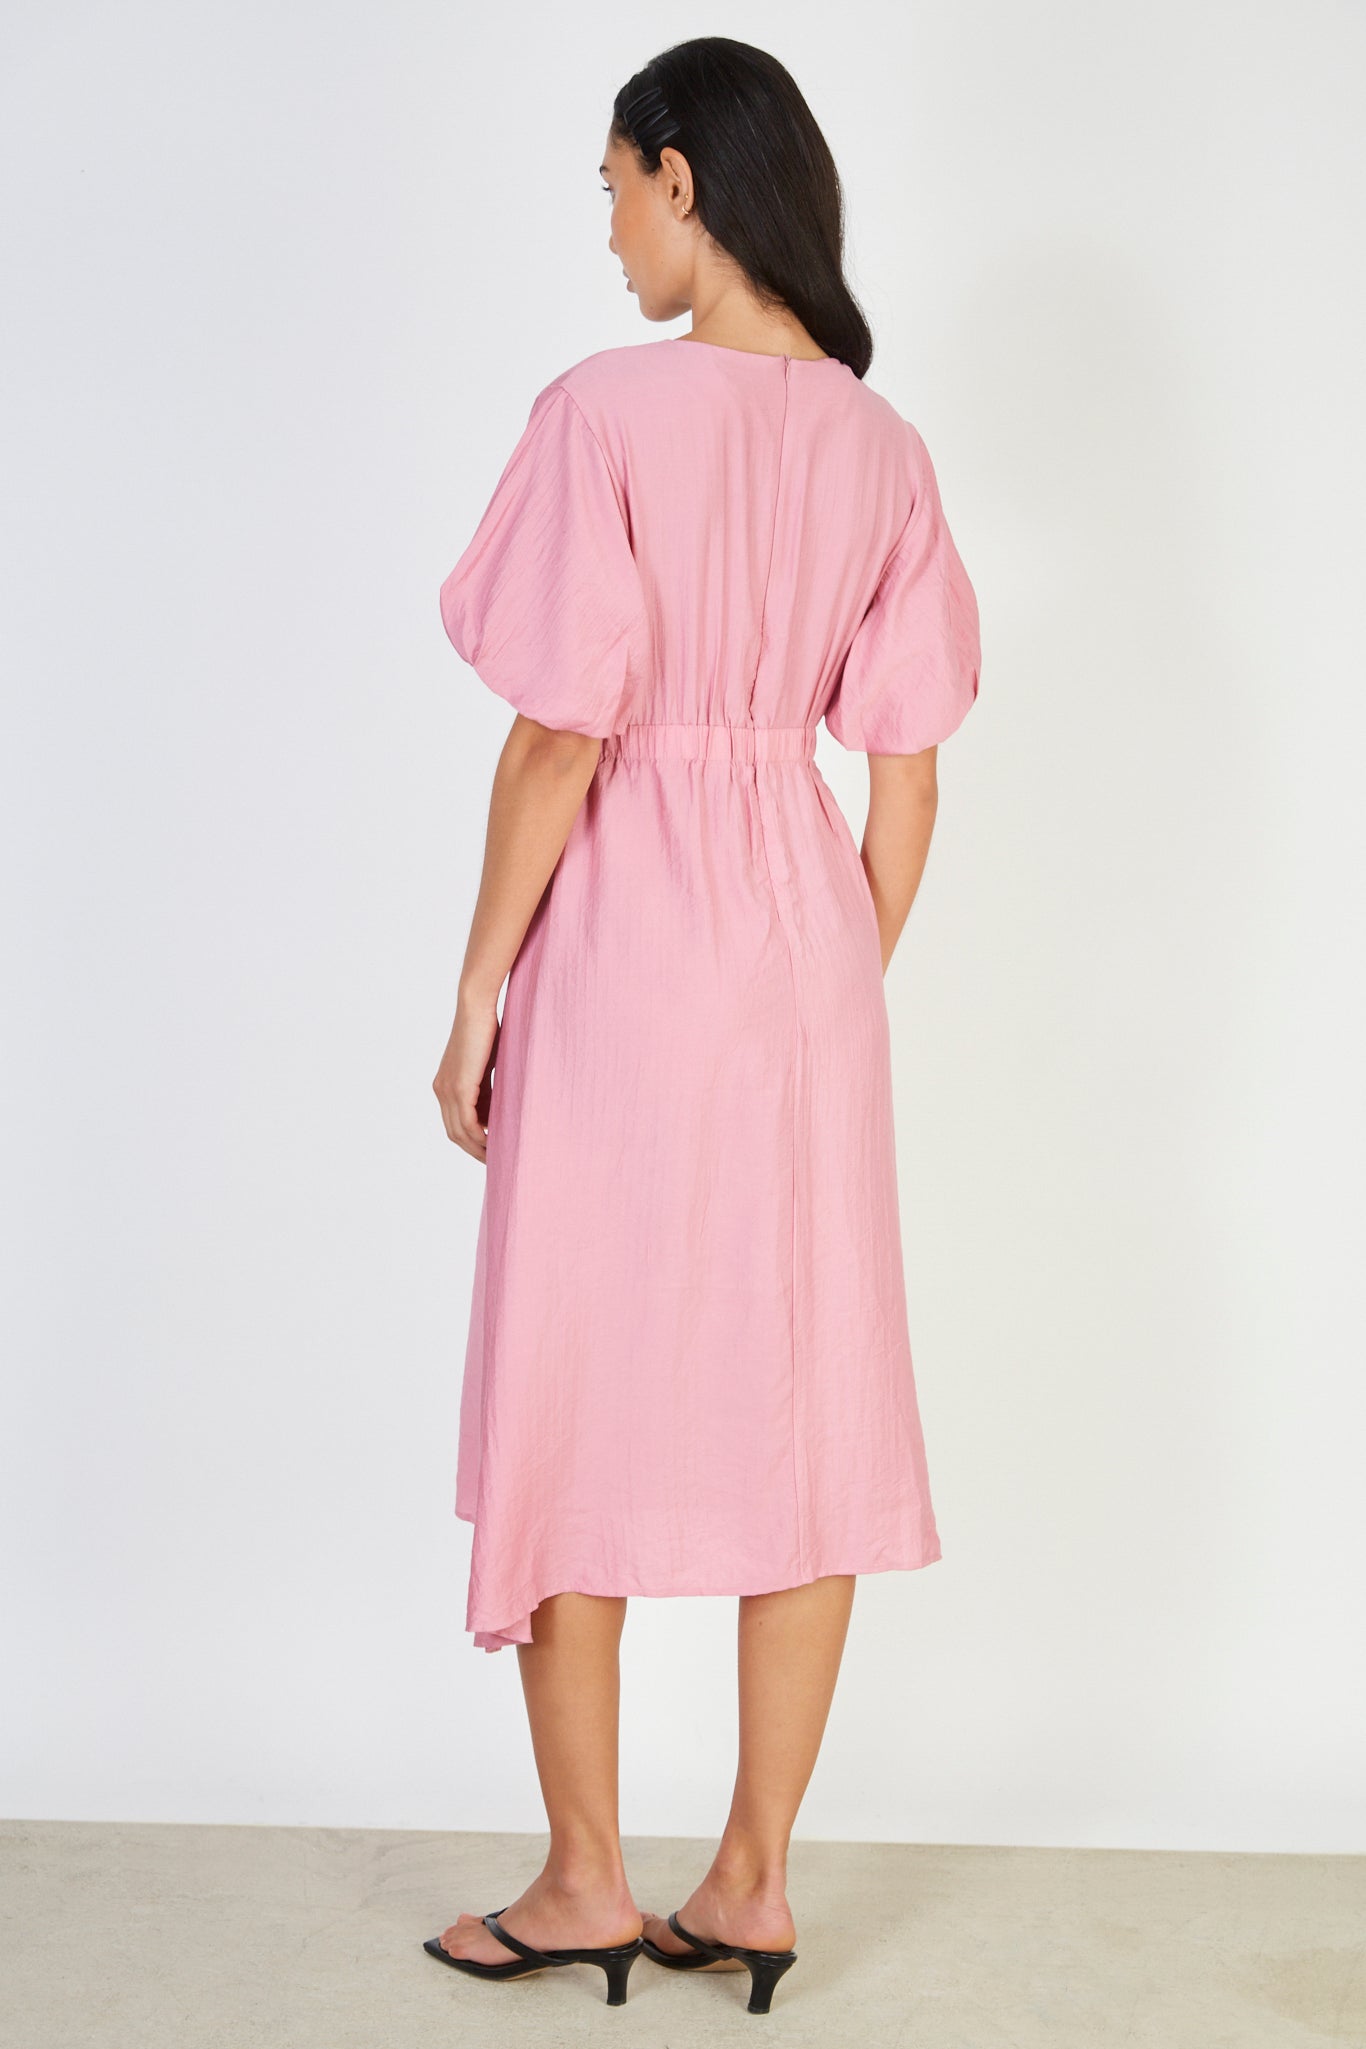 Bright pink puff sleeve dress